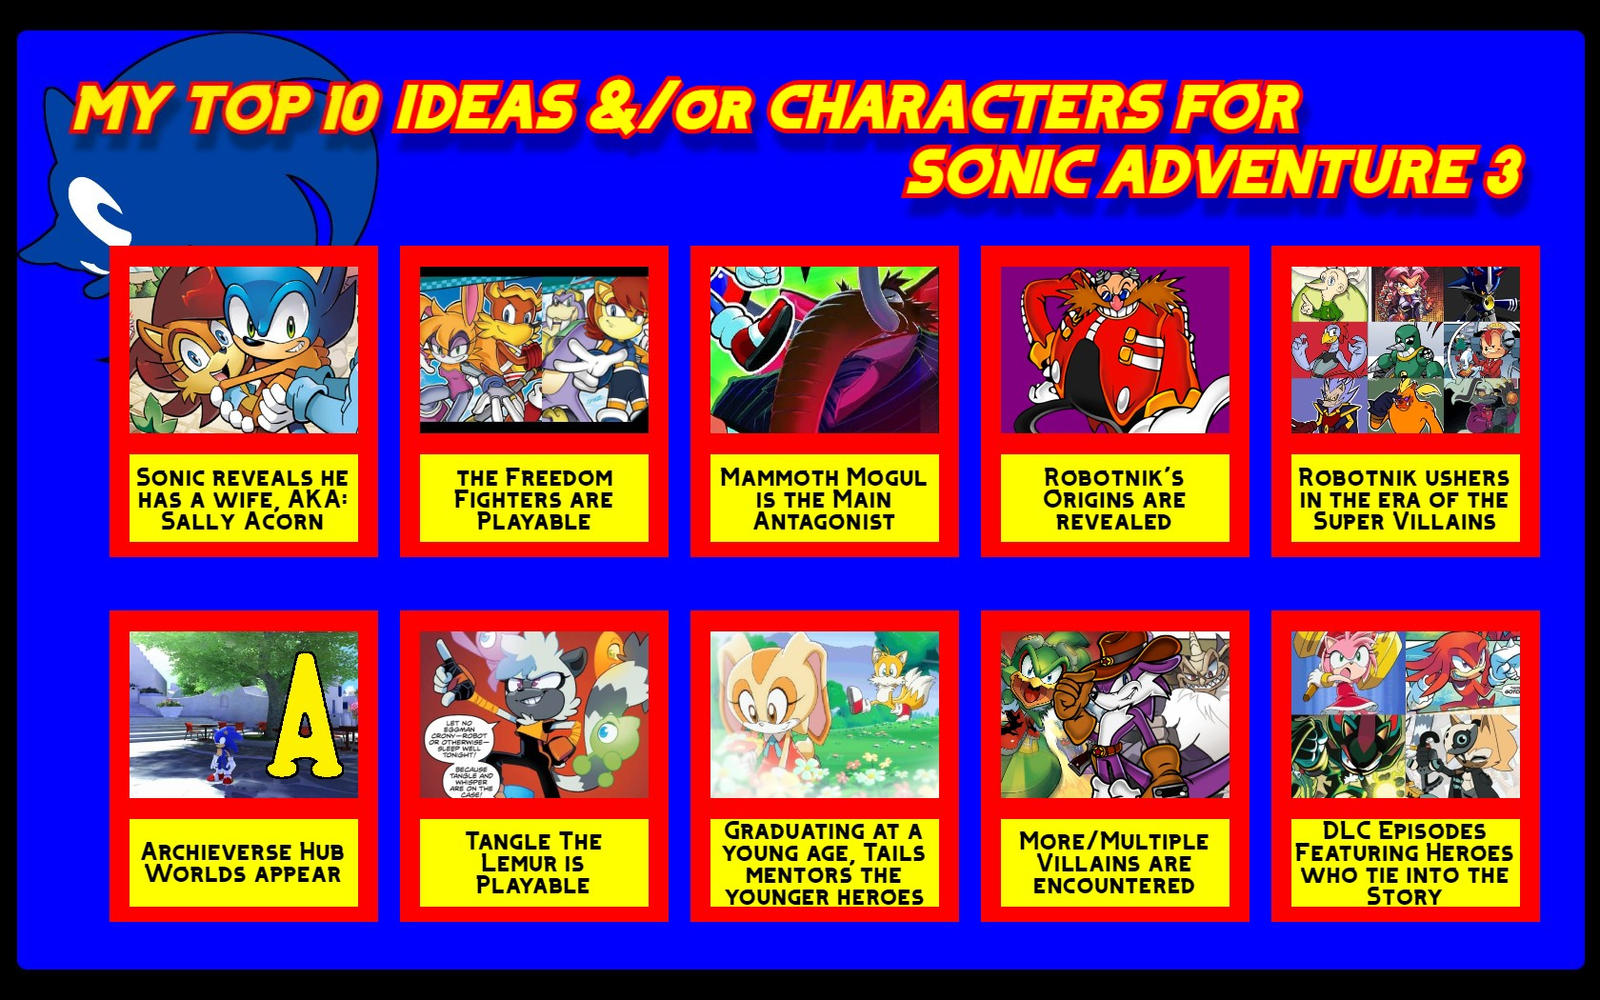 RTTP - Sonic Adventure (still my favorite Sonic game)